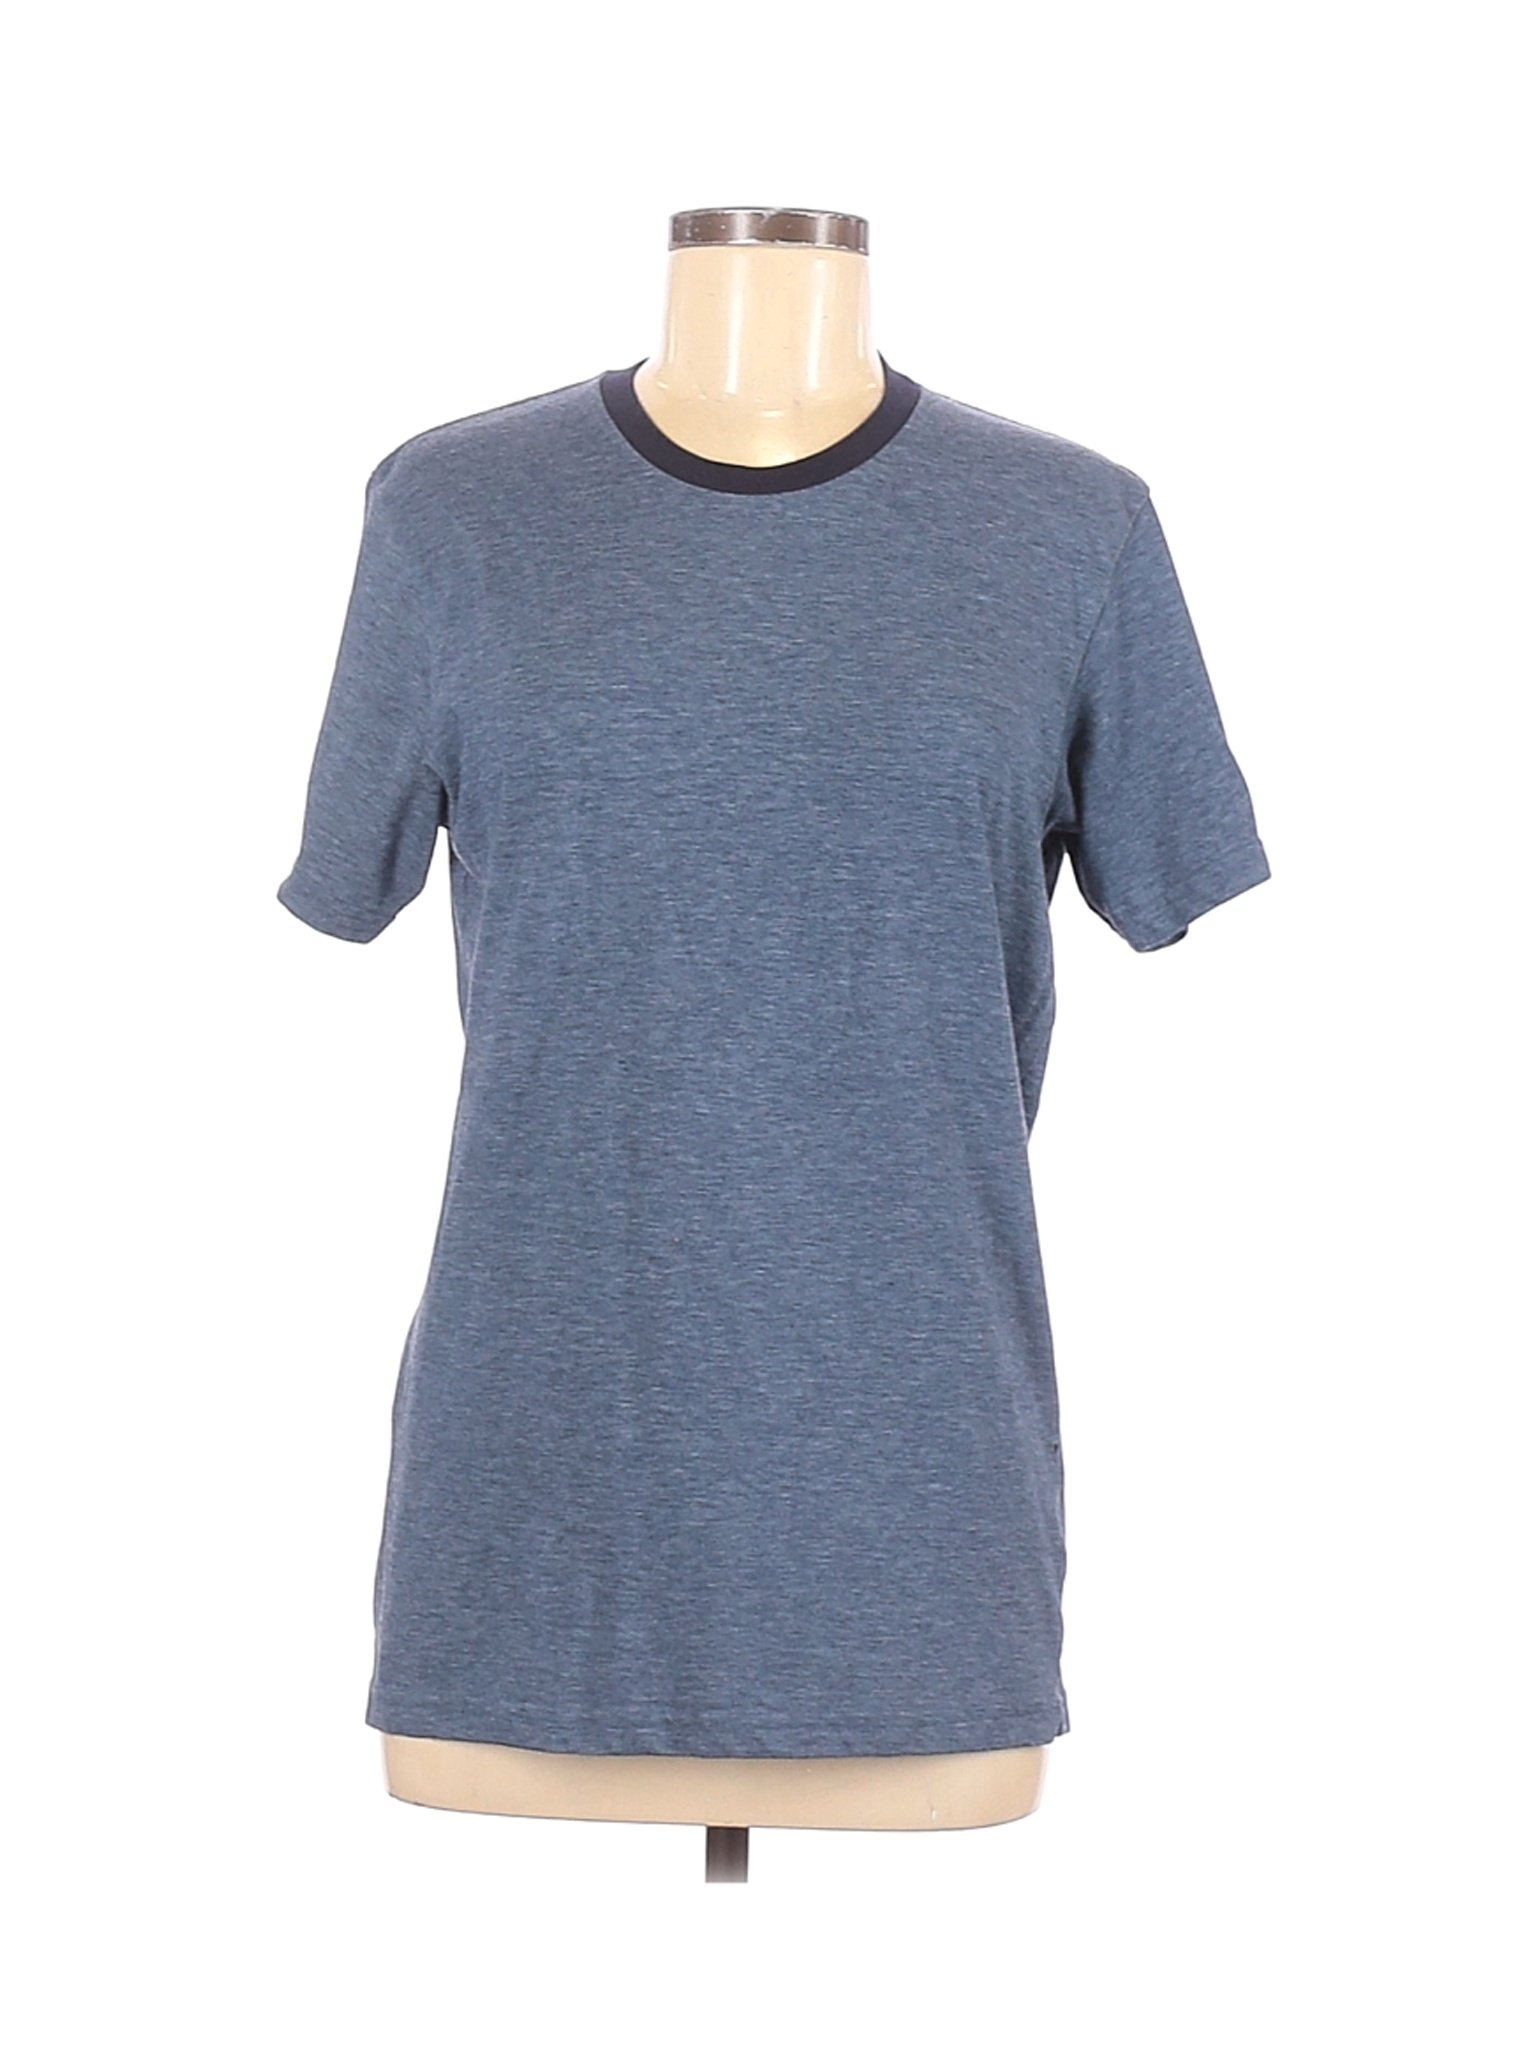 Uniqlo Women Blue Short Sleeve T-Shirt S | eBay